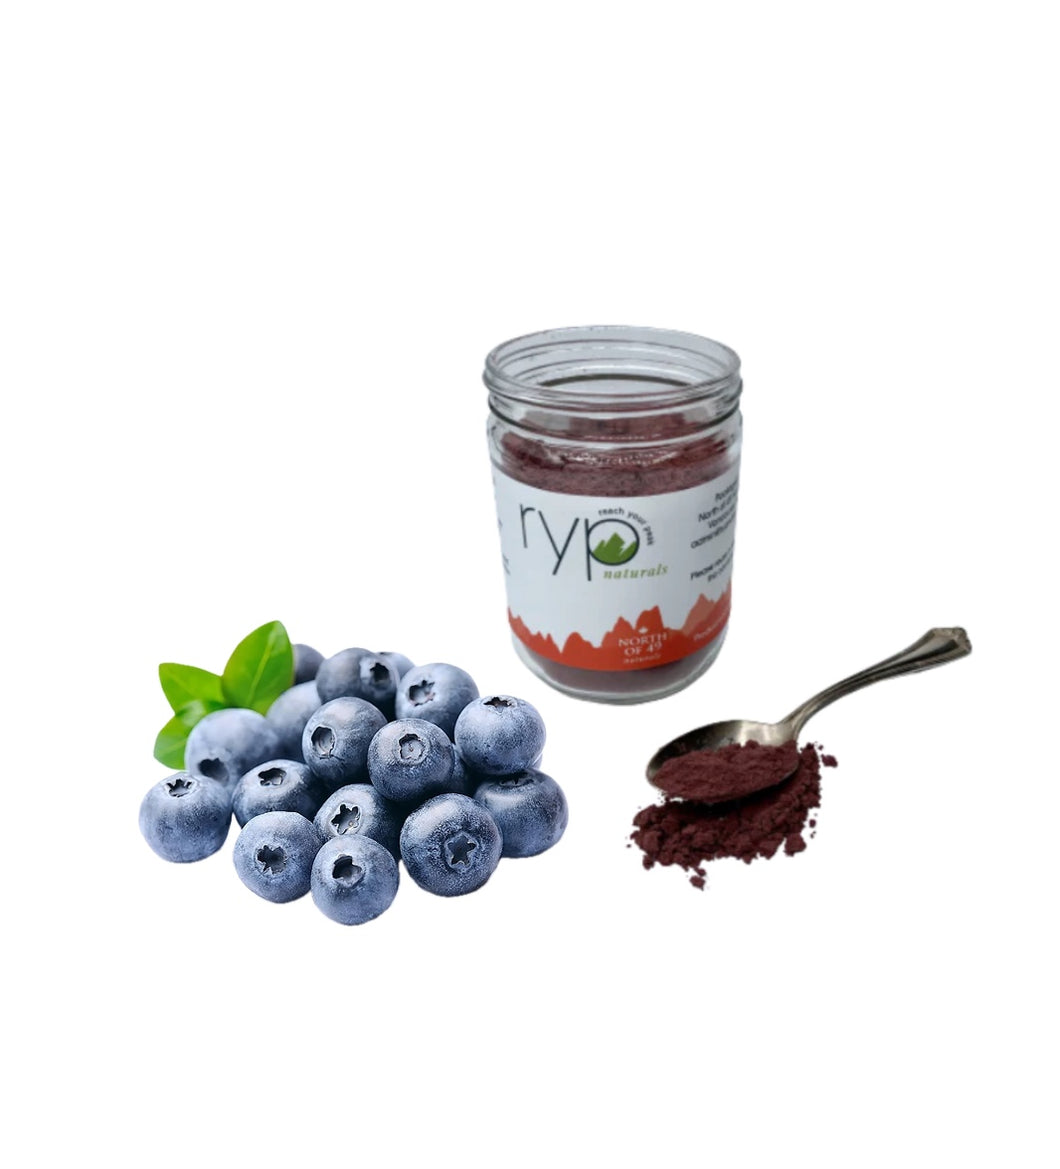 RYP Naturals - Organic Blueberry Powder